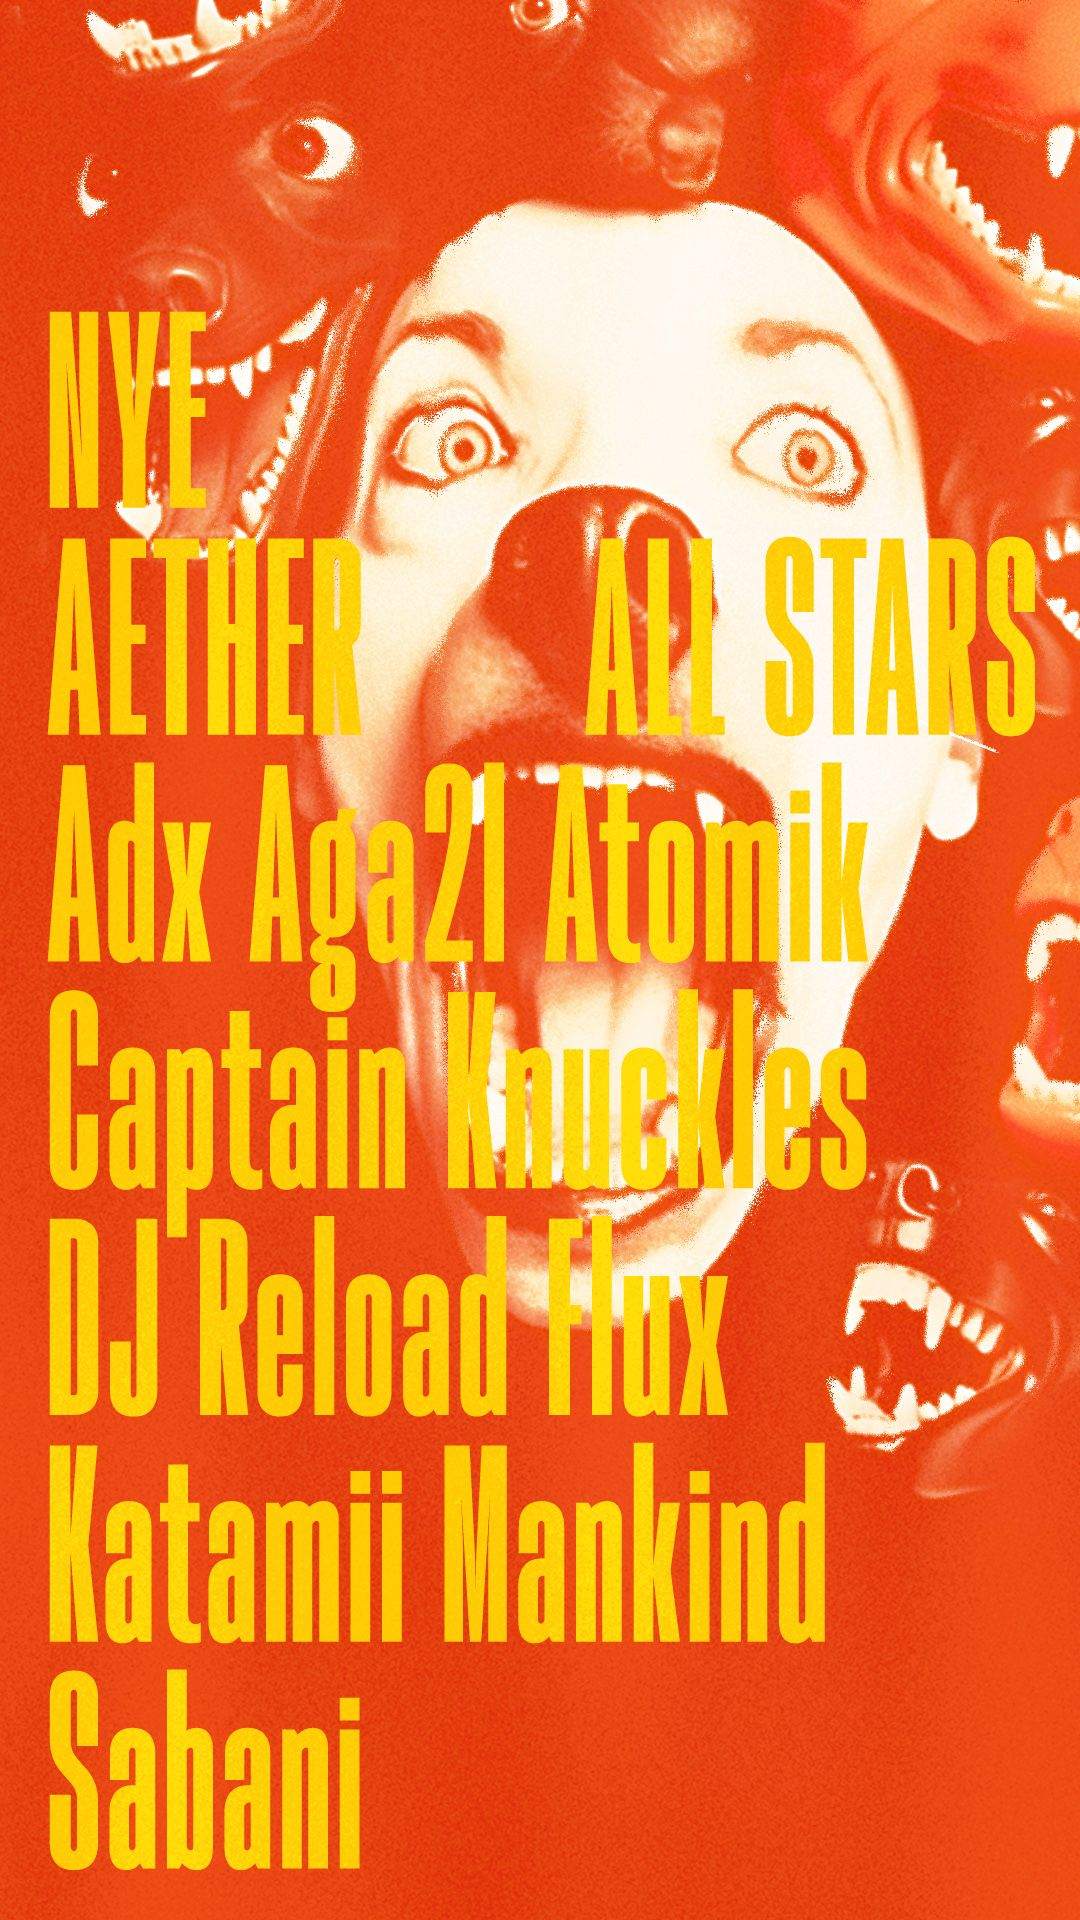 NYE AETHER: ALL STARS: Adx, AGA2L, Atomik, Captain Knuckles,DJ Reload, Flux - フライヤー表